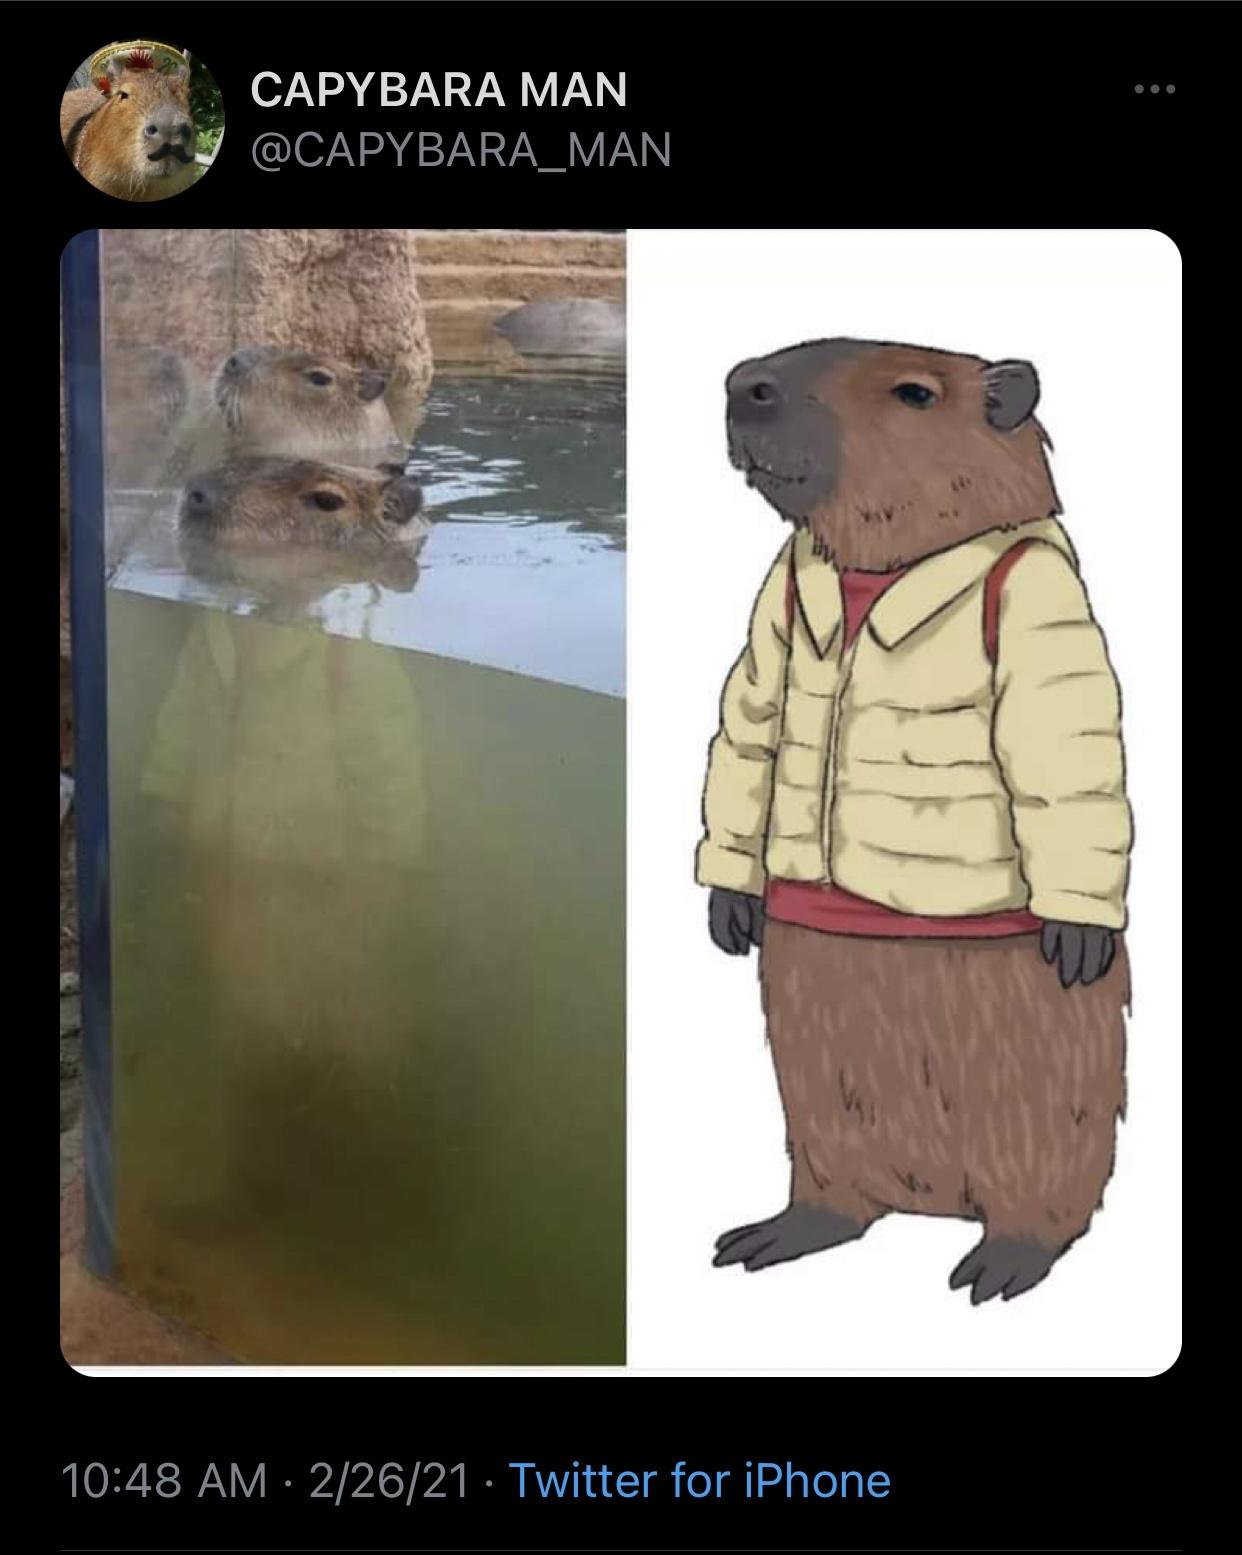 fauna - Capybara Man 22621 Twitter for iPhone